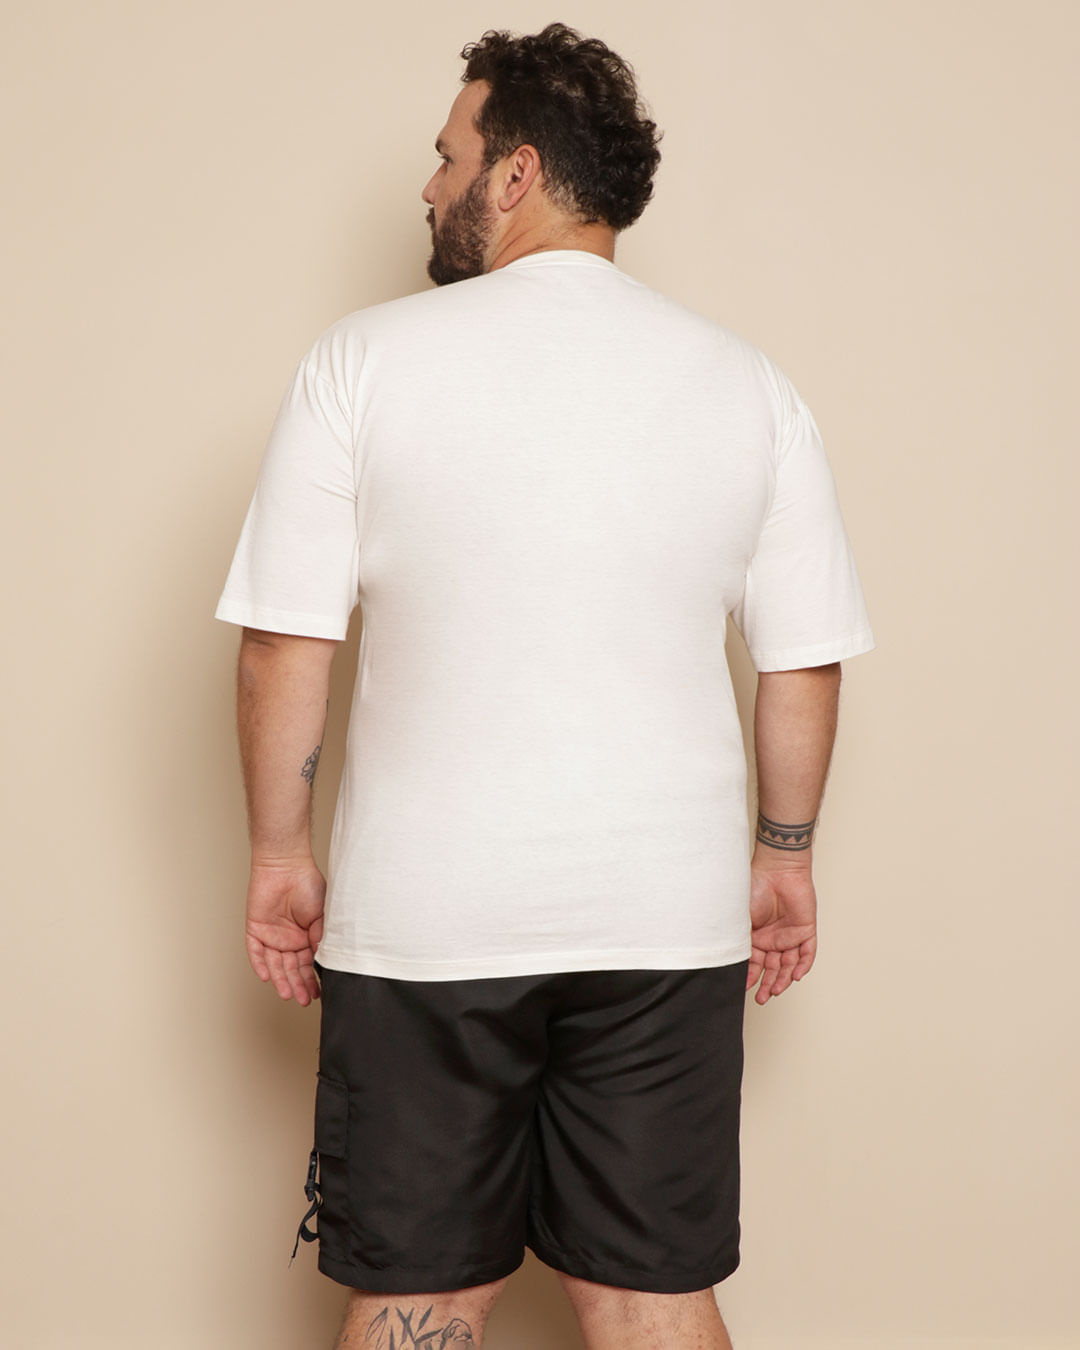 Camiseta-Plus-Size-Masculina-Manga-Curta-Estampa-Flocada-Off-White